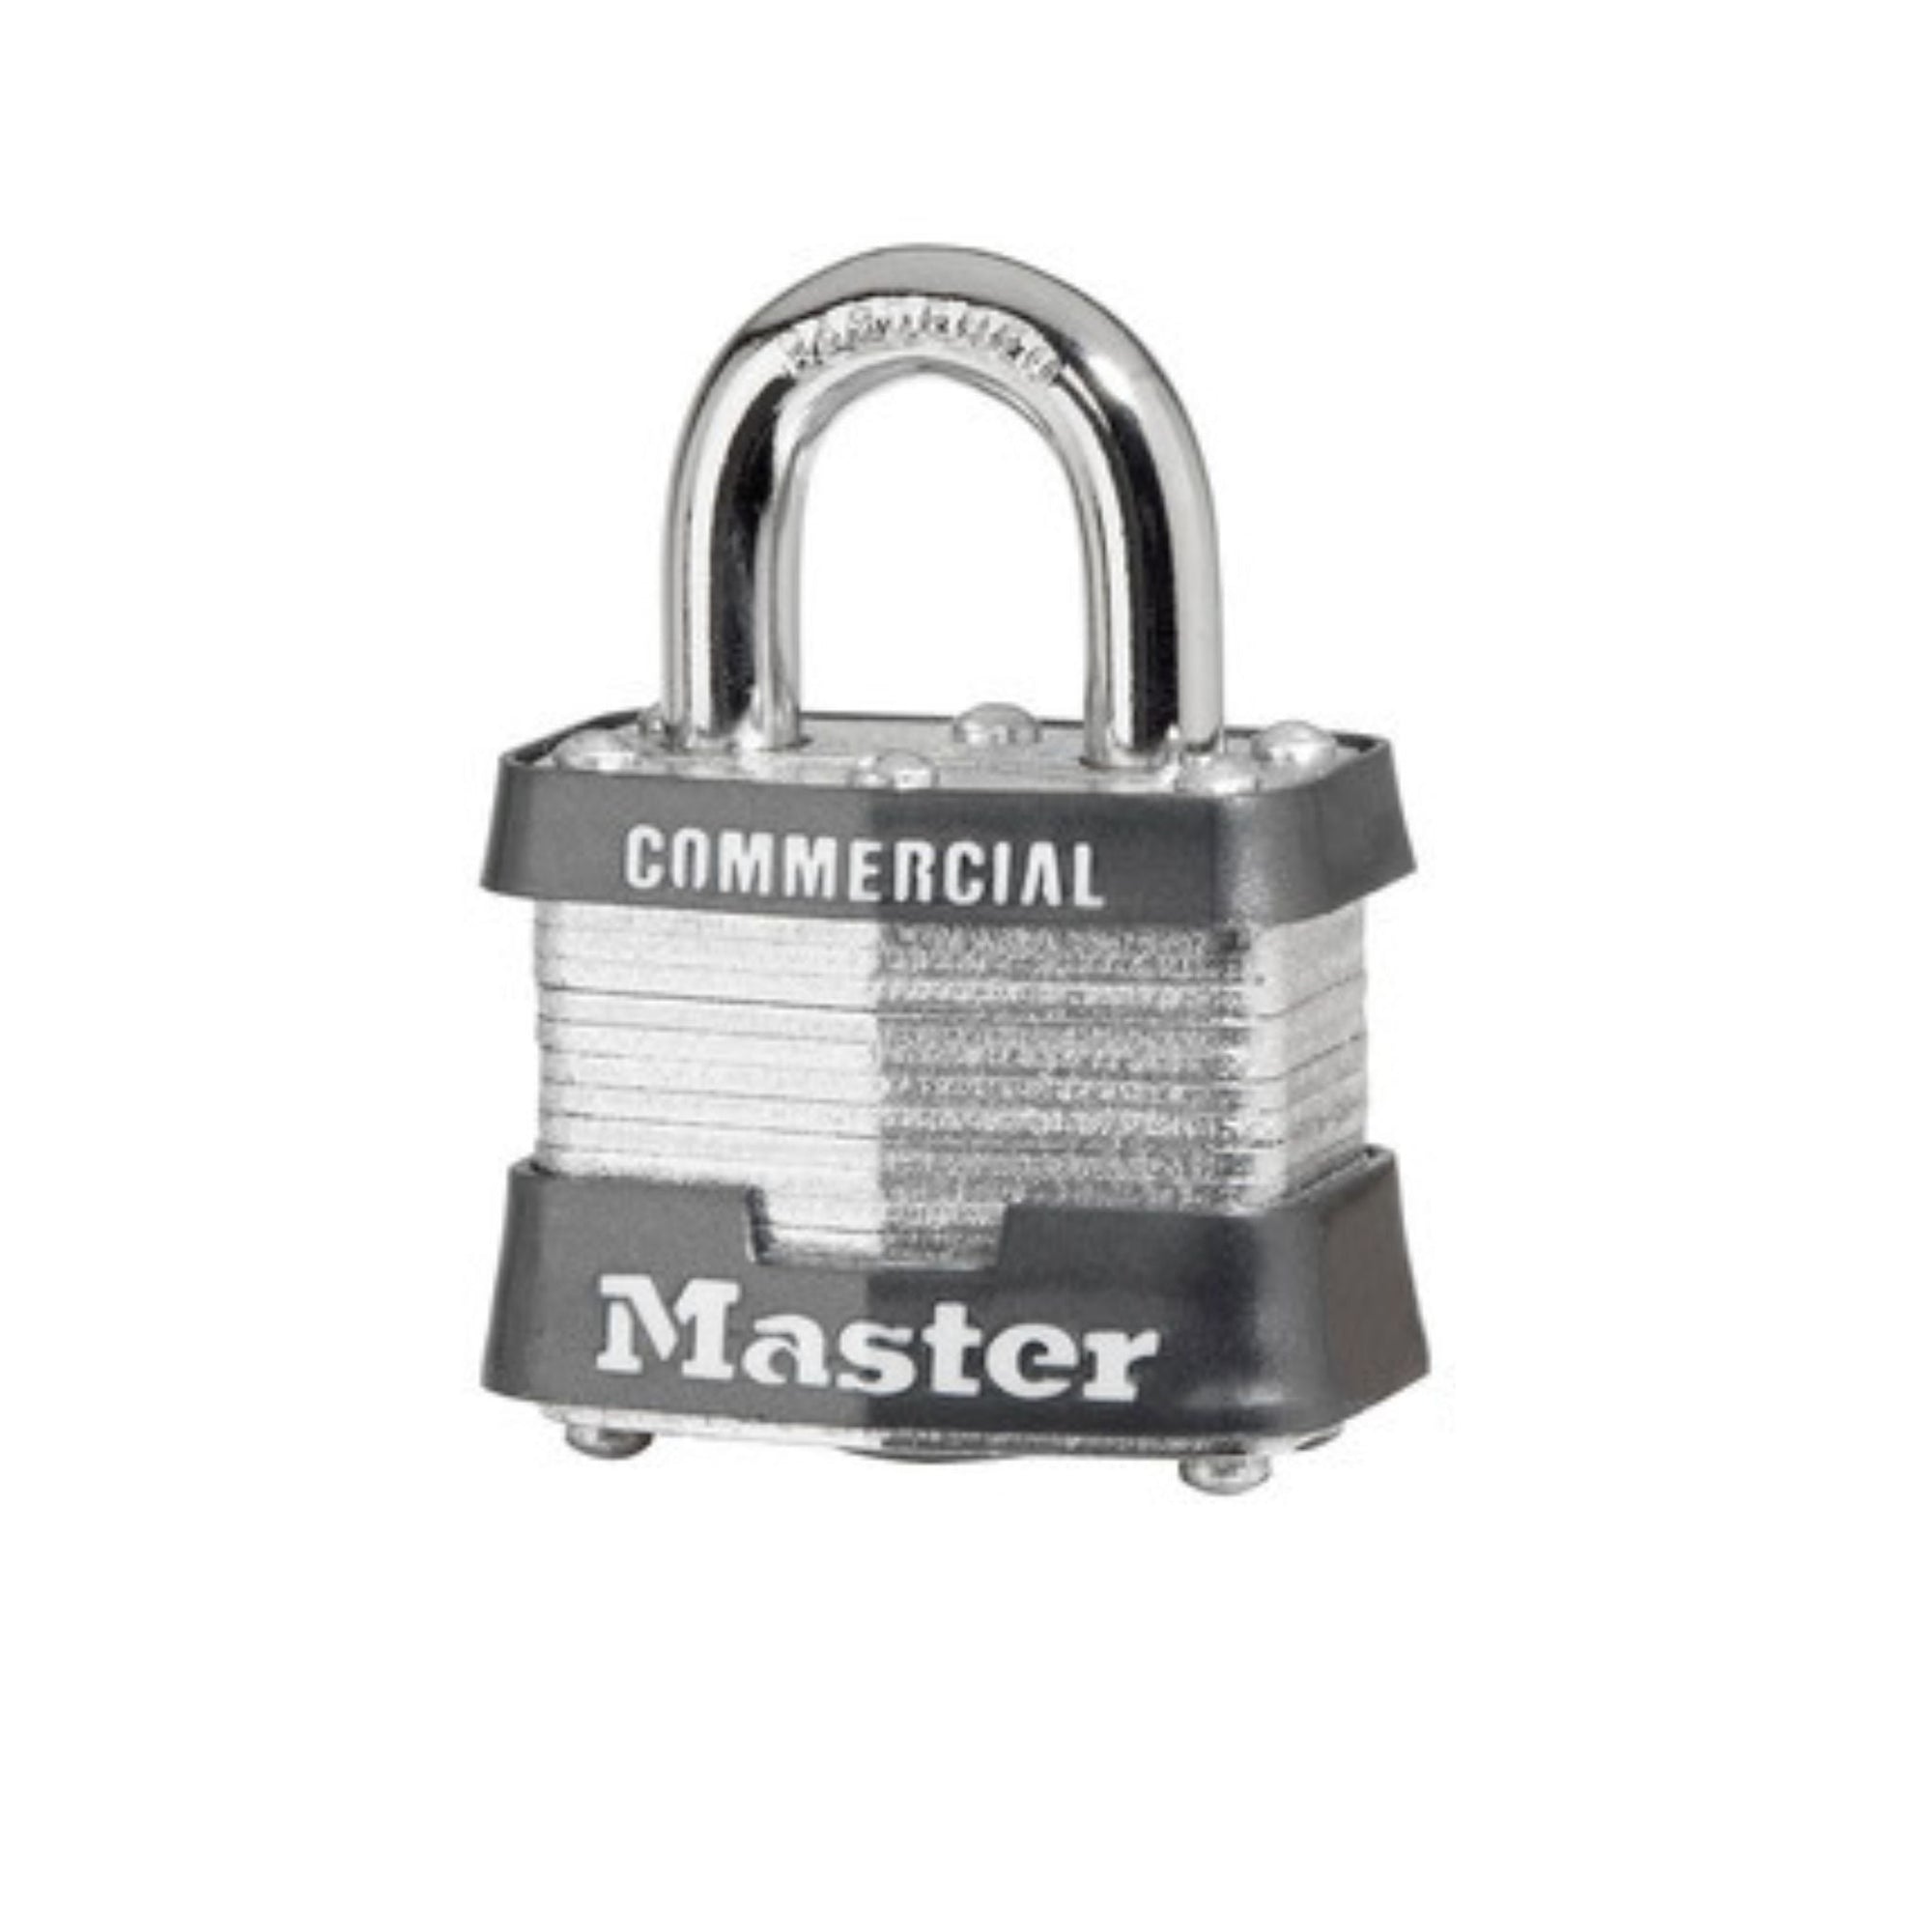 Master Lock 3KA 0304 Lock Laminated steel No. 3 Series Padlock Keyed to Match Existing Key Number KA0304 - The Lock Source